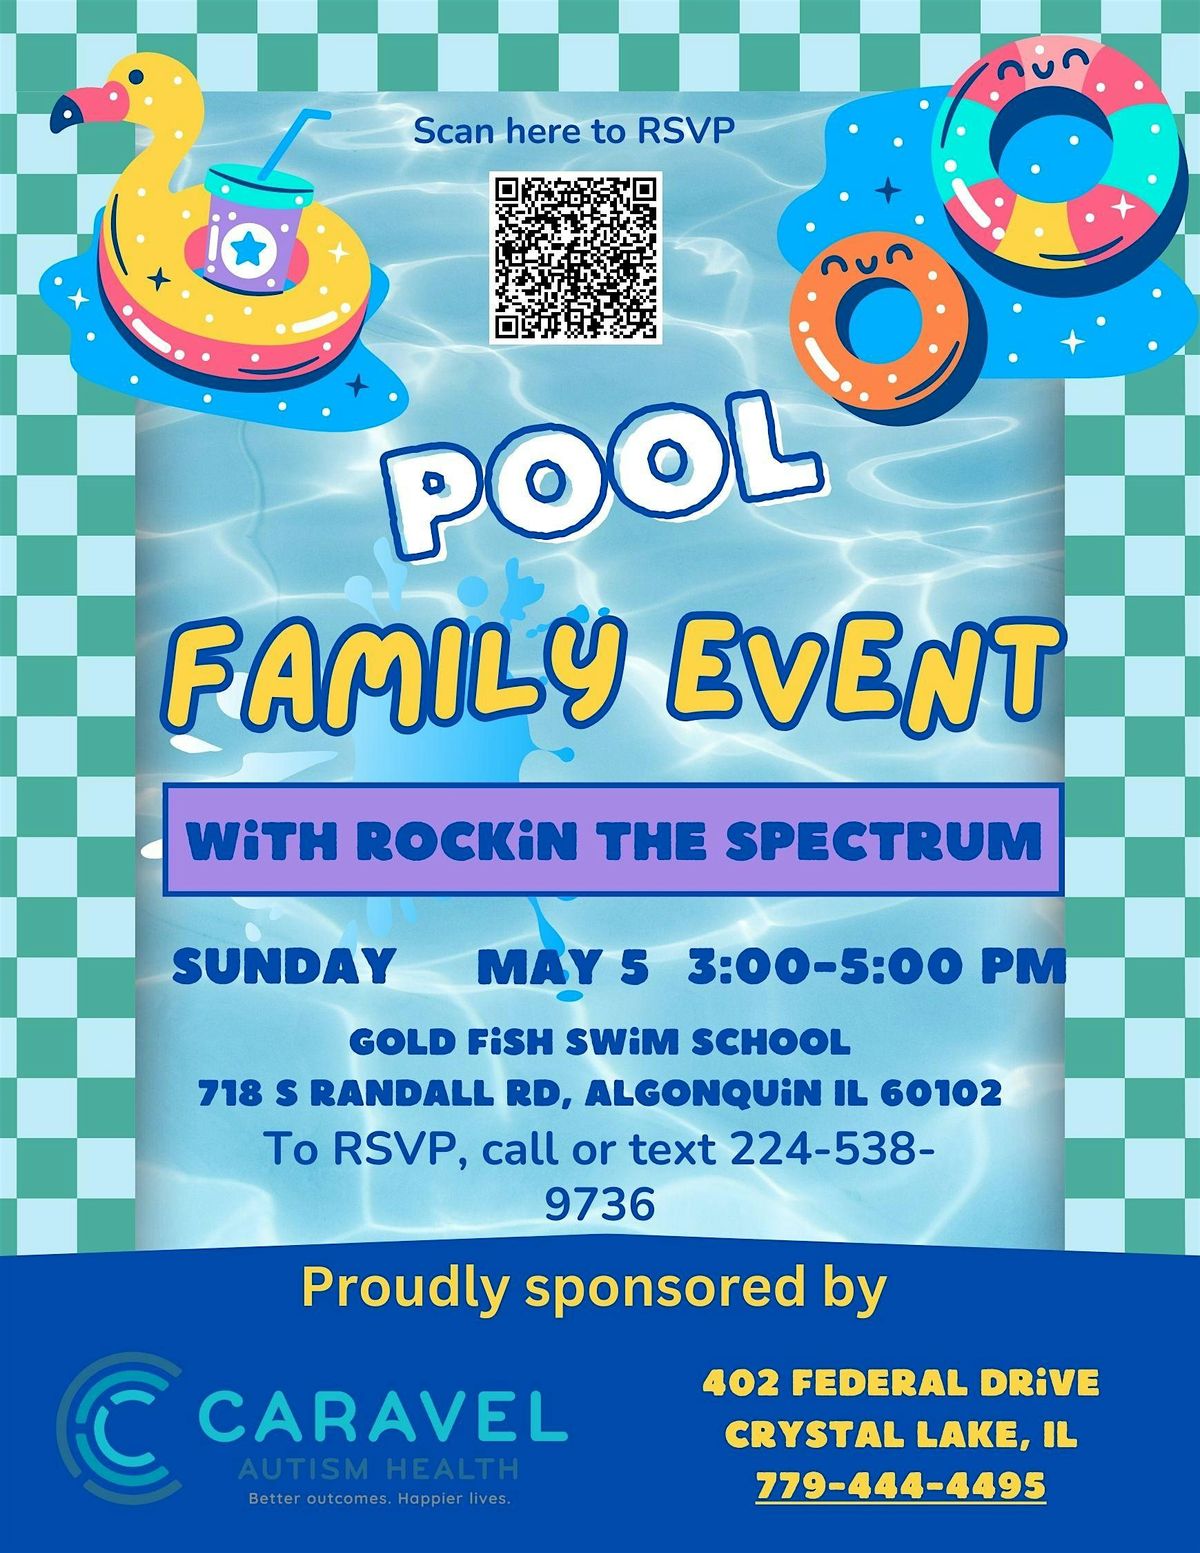 Rockin The Spectrum's Family Swimming Event